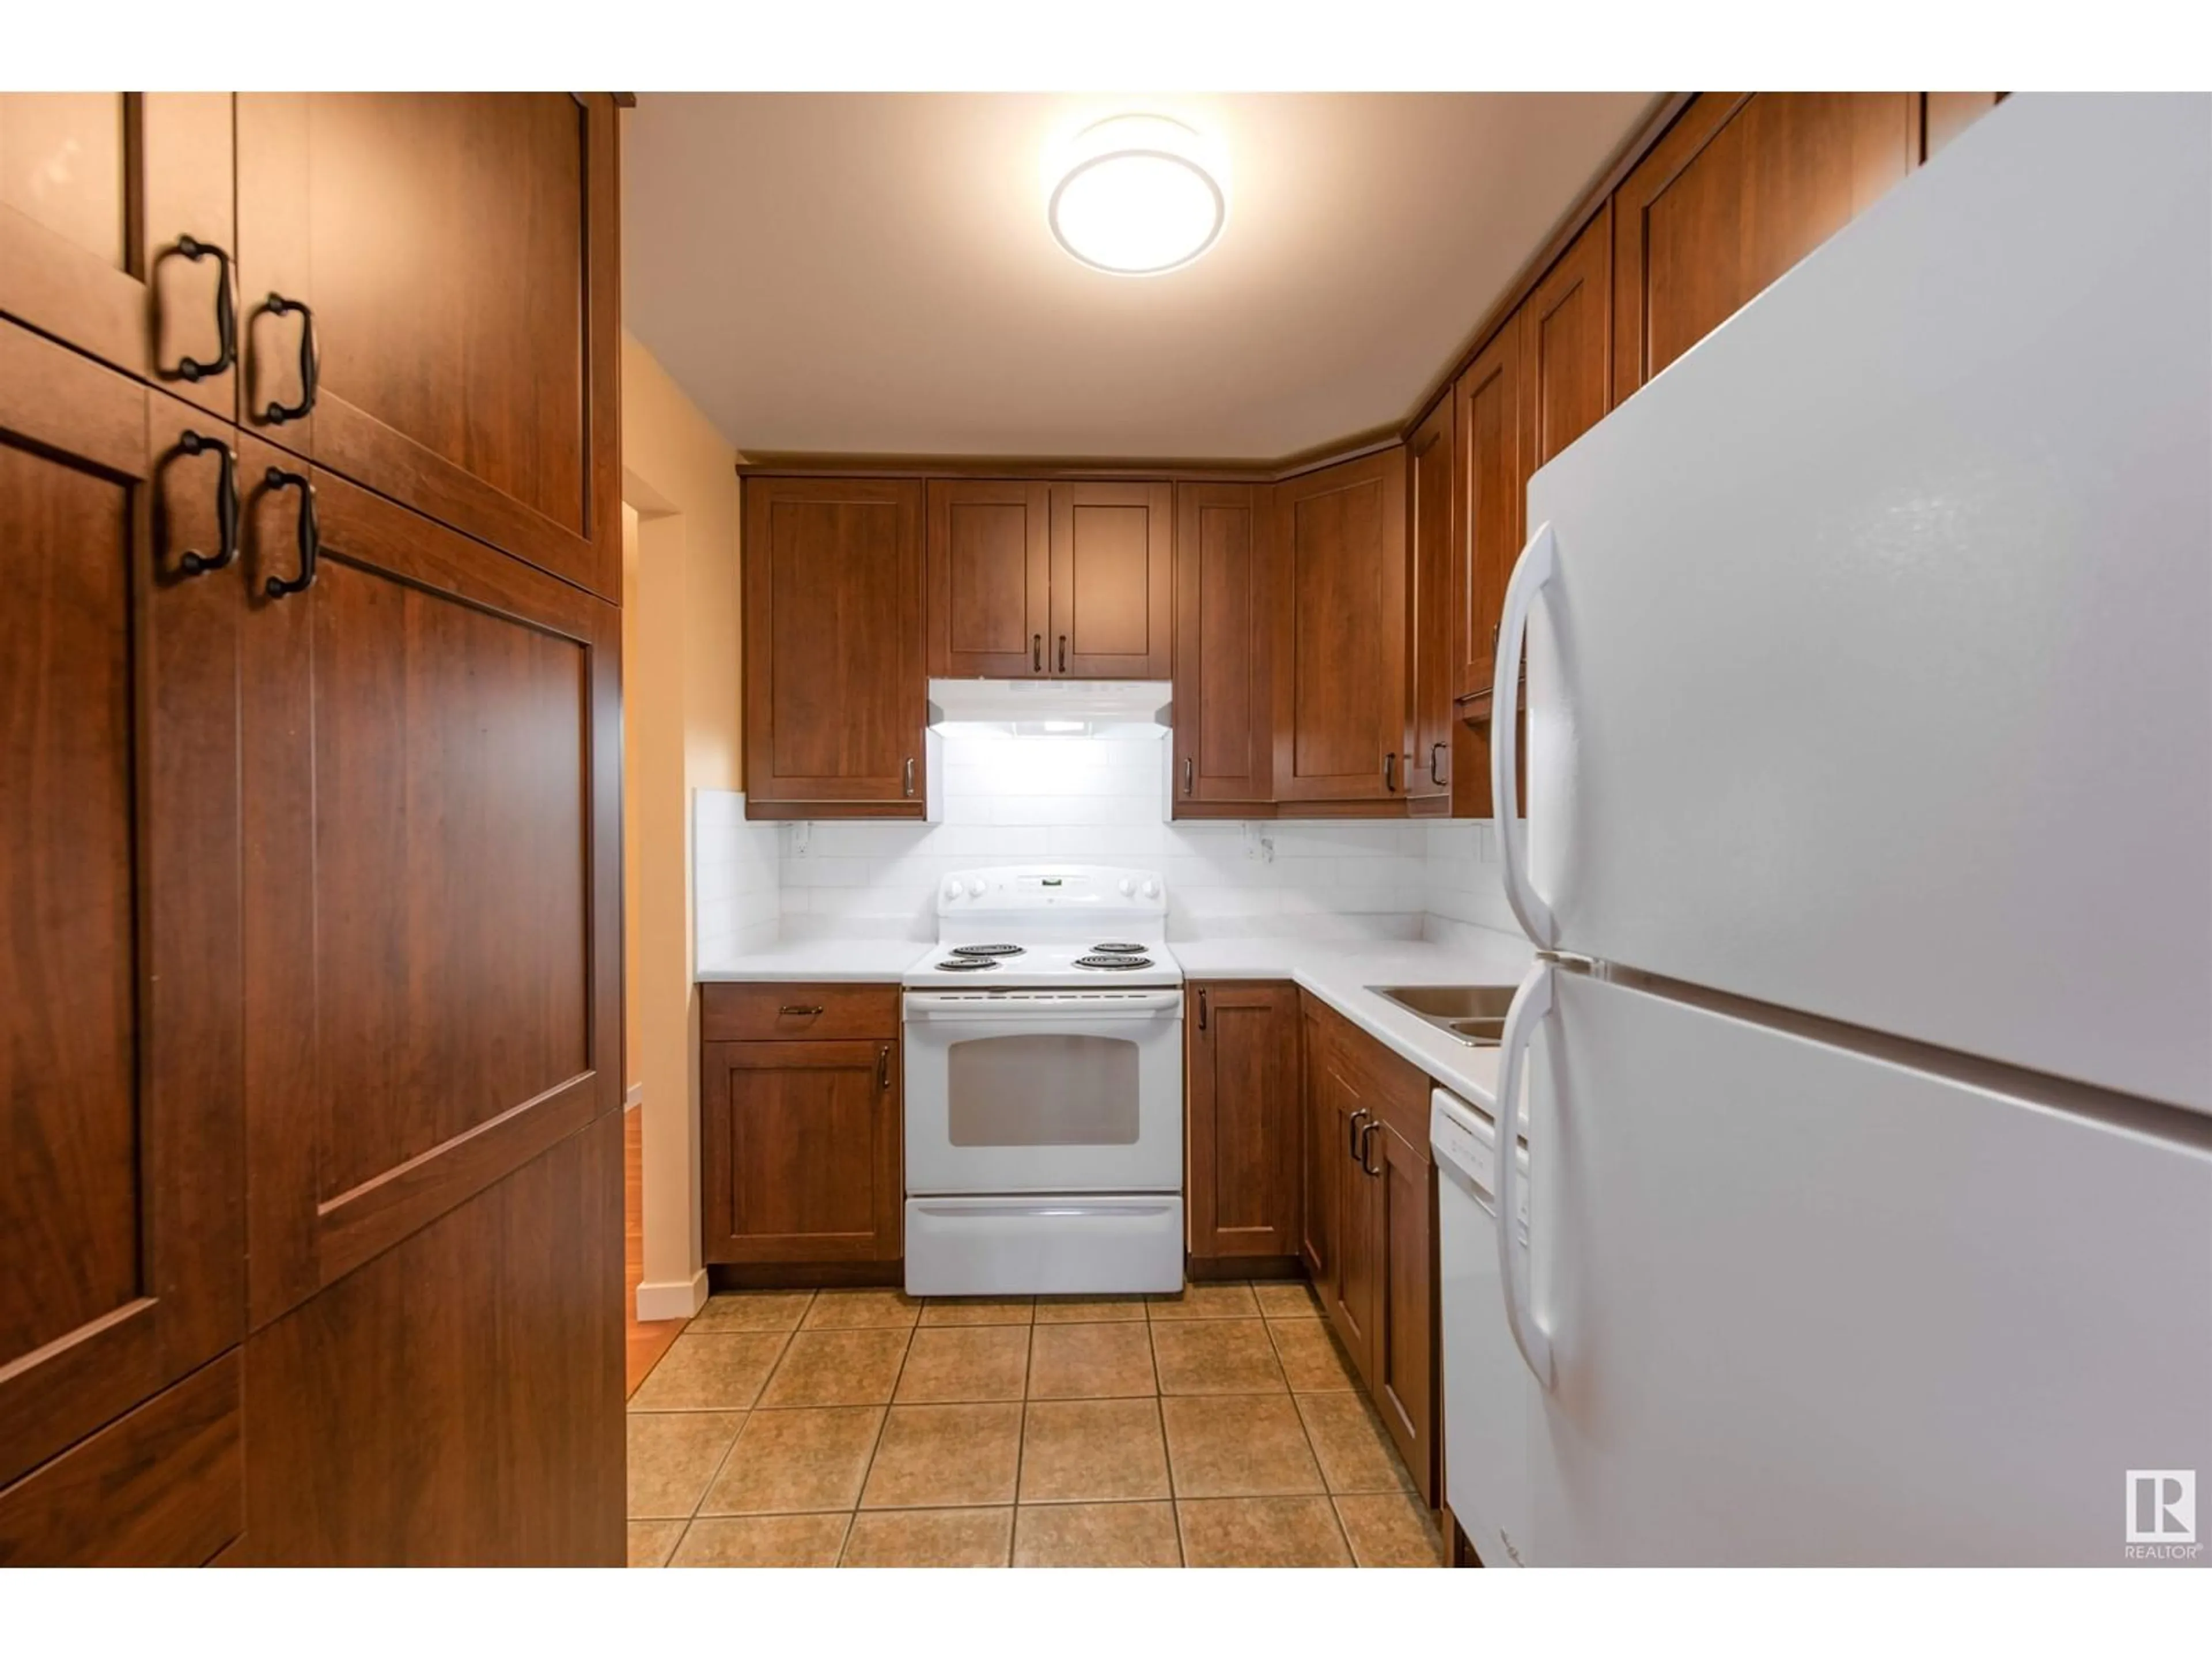 Standard kitchen for #402 1628 48 ST NW, Edmonton Alberta T6L5P2